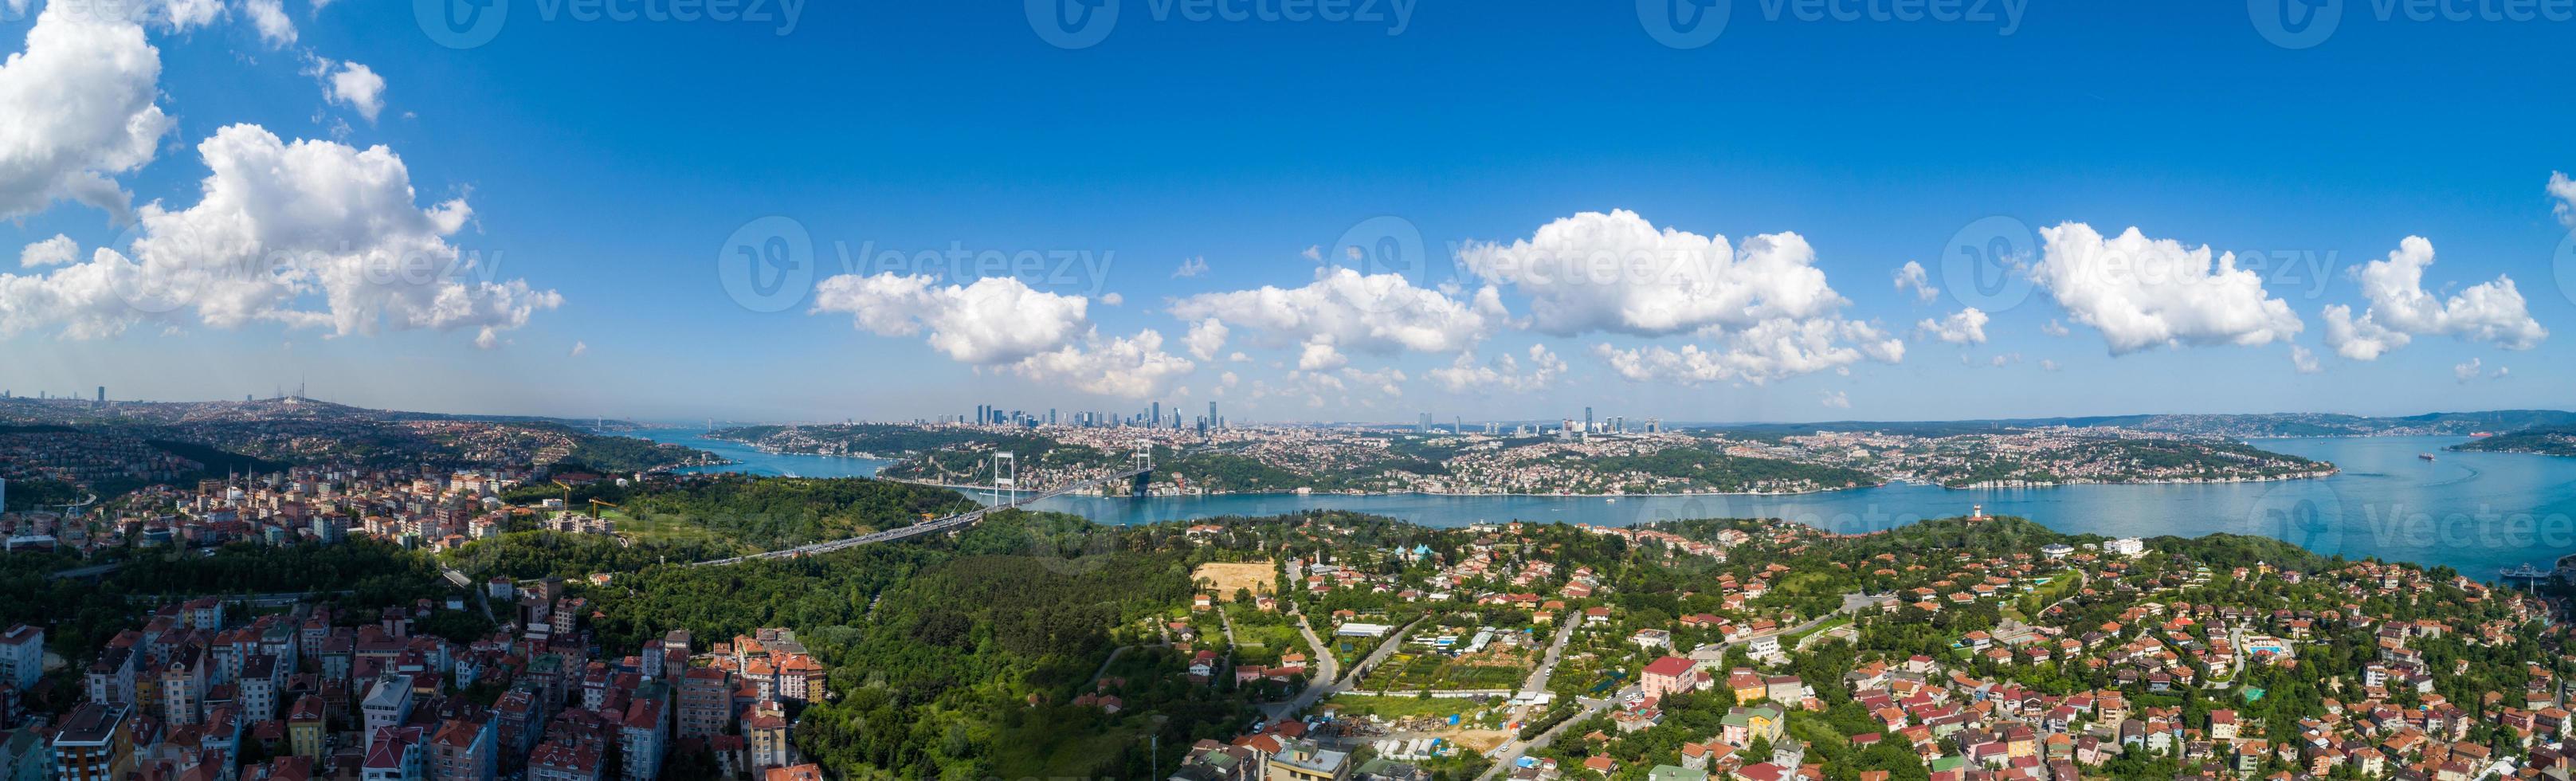 panorama del bosforo di istanbul foto